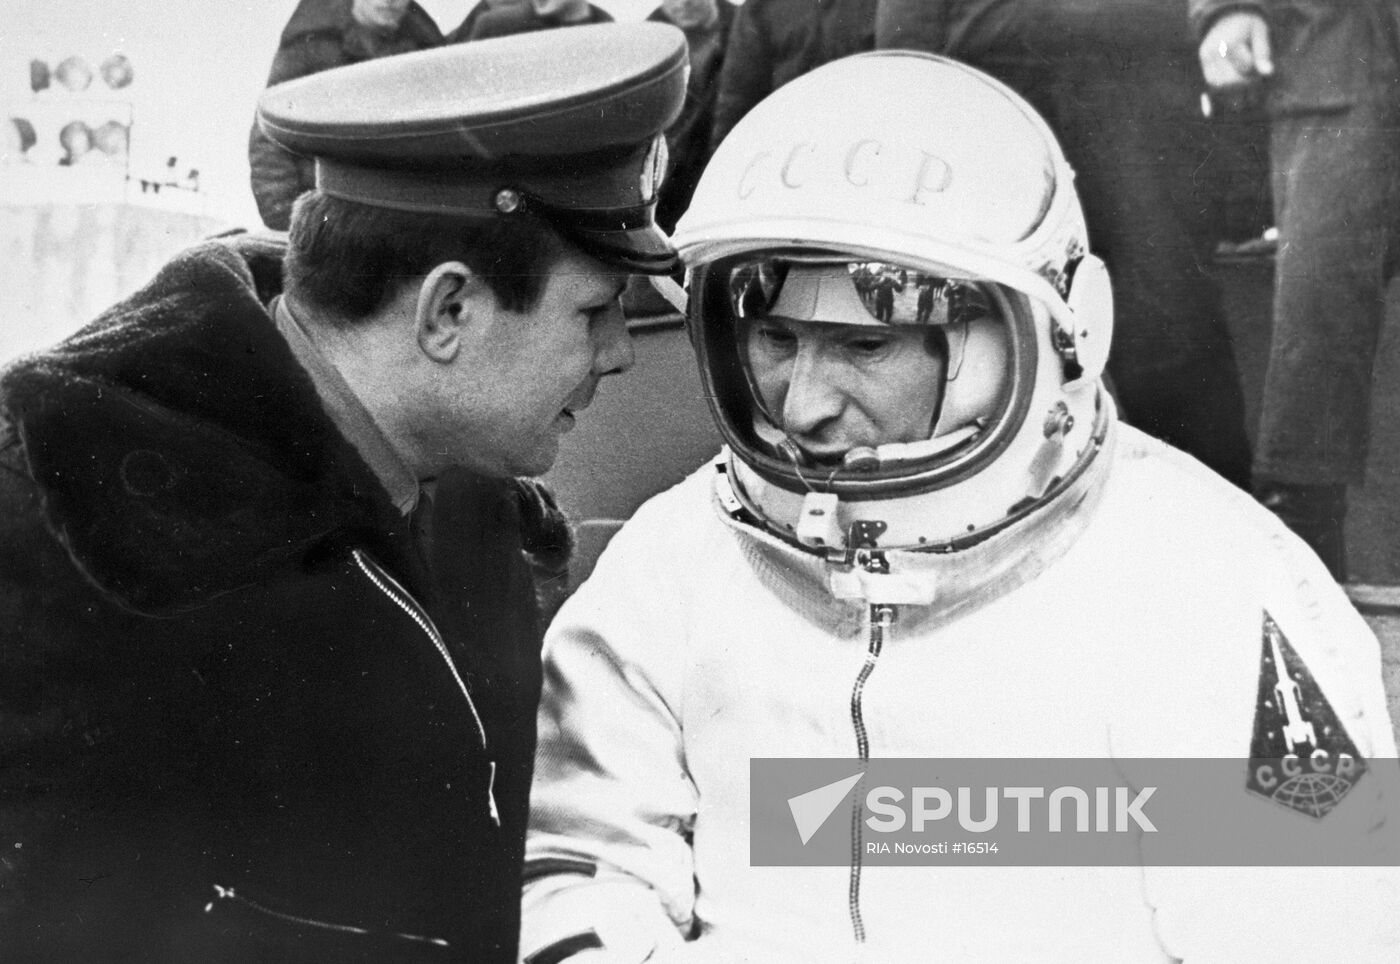 Cosmonauts Gagarin and Belyaev before the latter's orbital mission